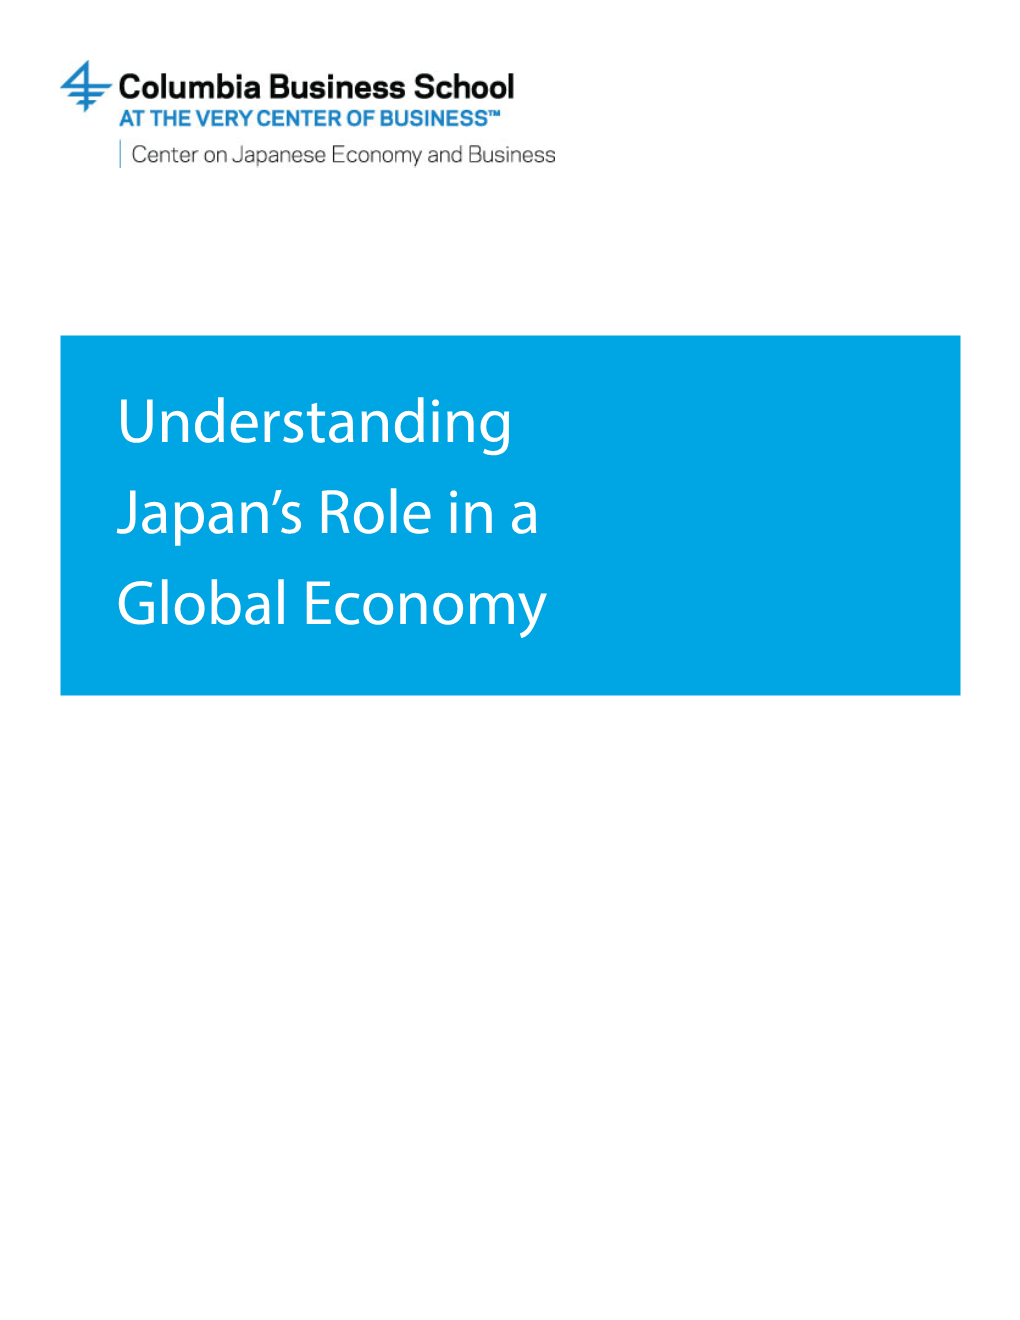 Understanding Japan's Role in a Global